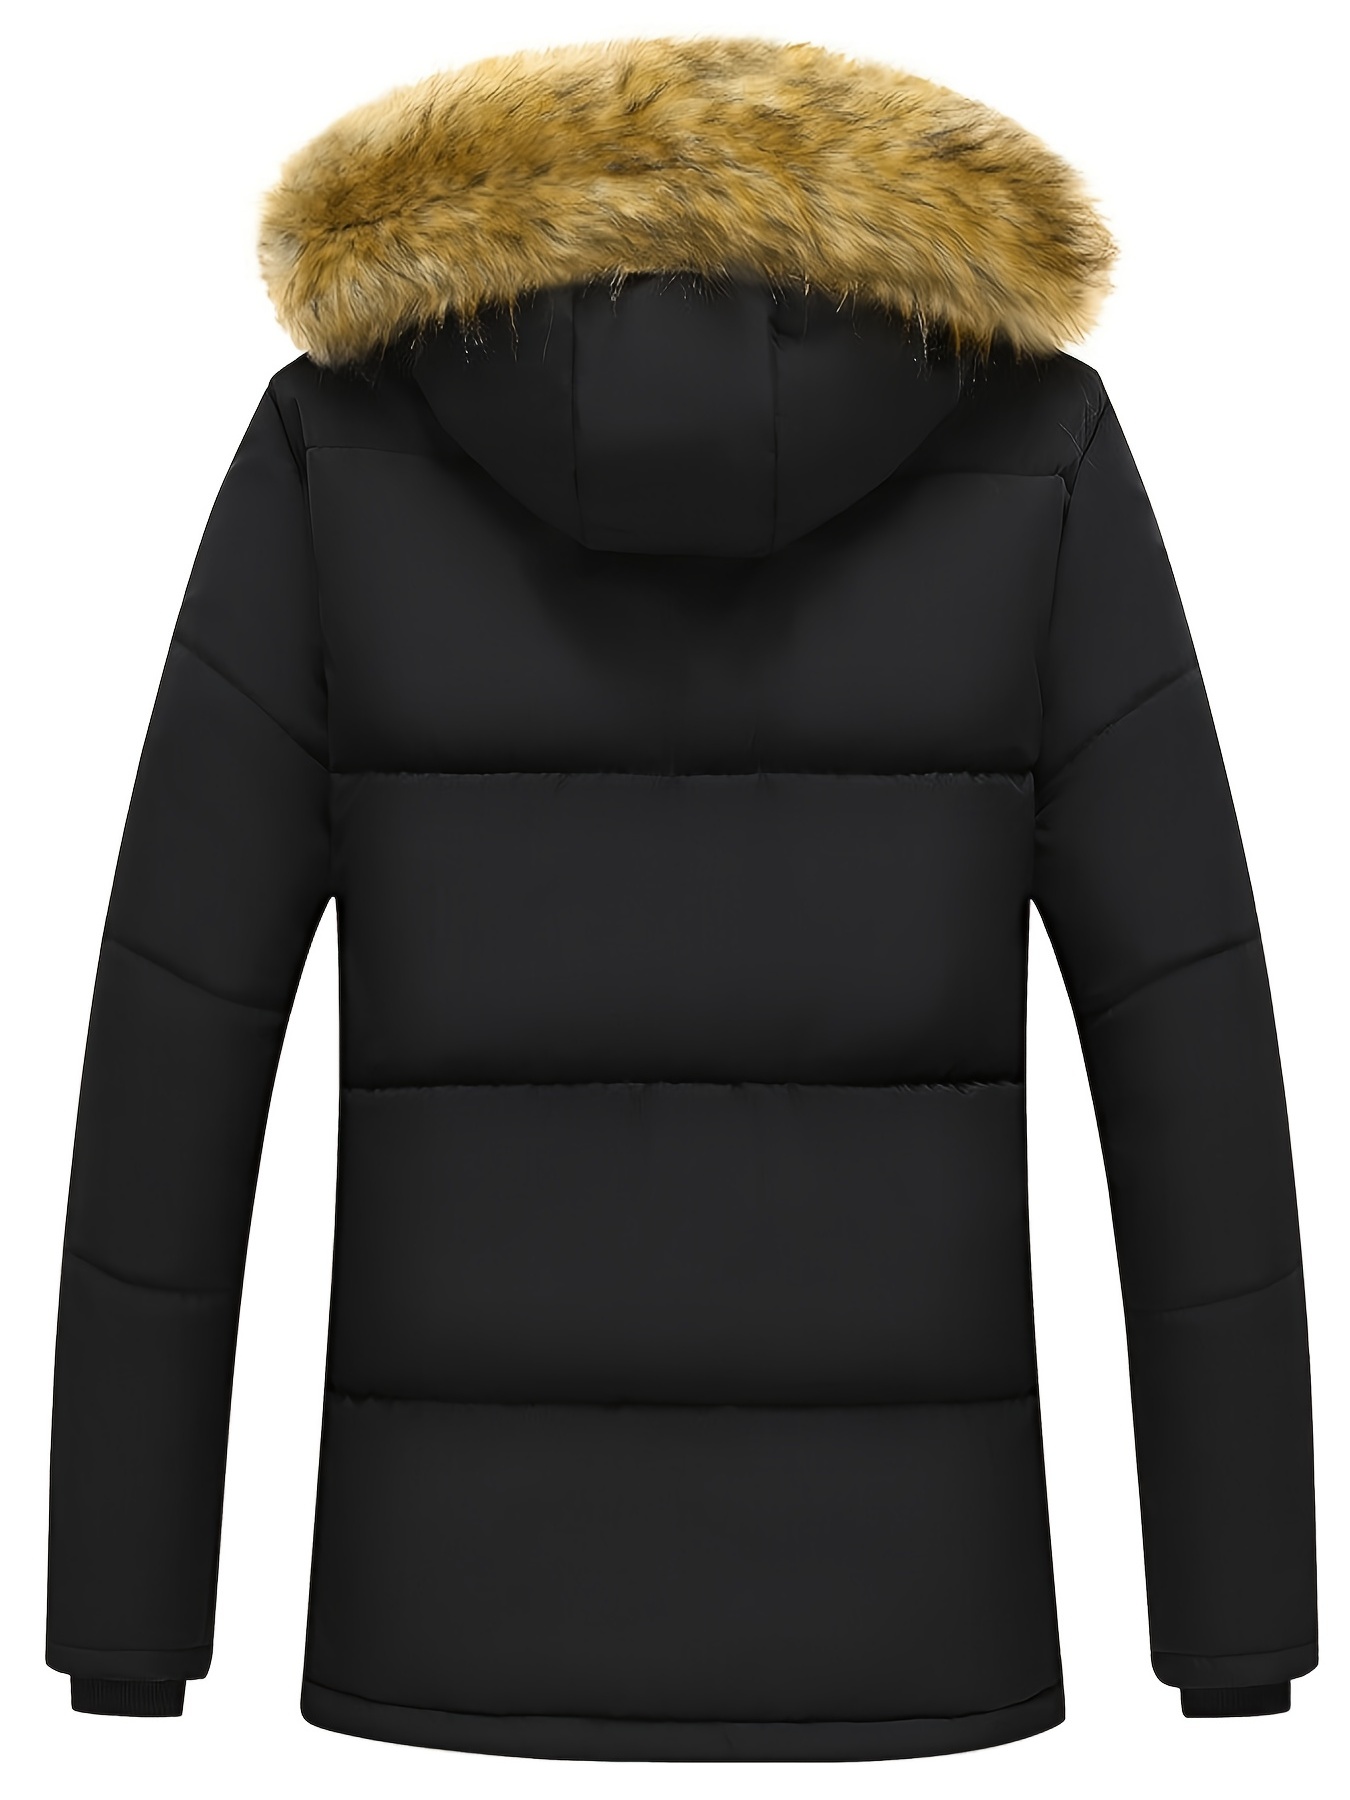 TQWQT Men's Winter Warm Parka Jacket Sherpa Lined Cotton Coat with  Detachable Hood